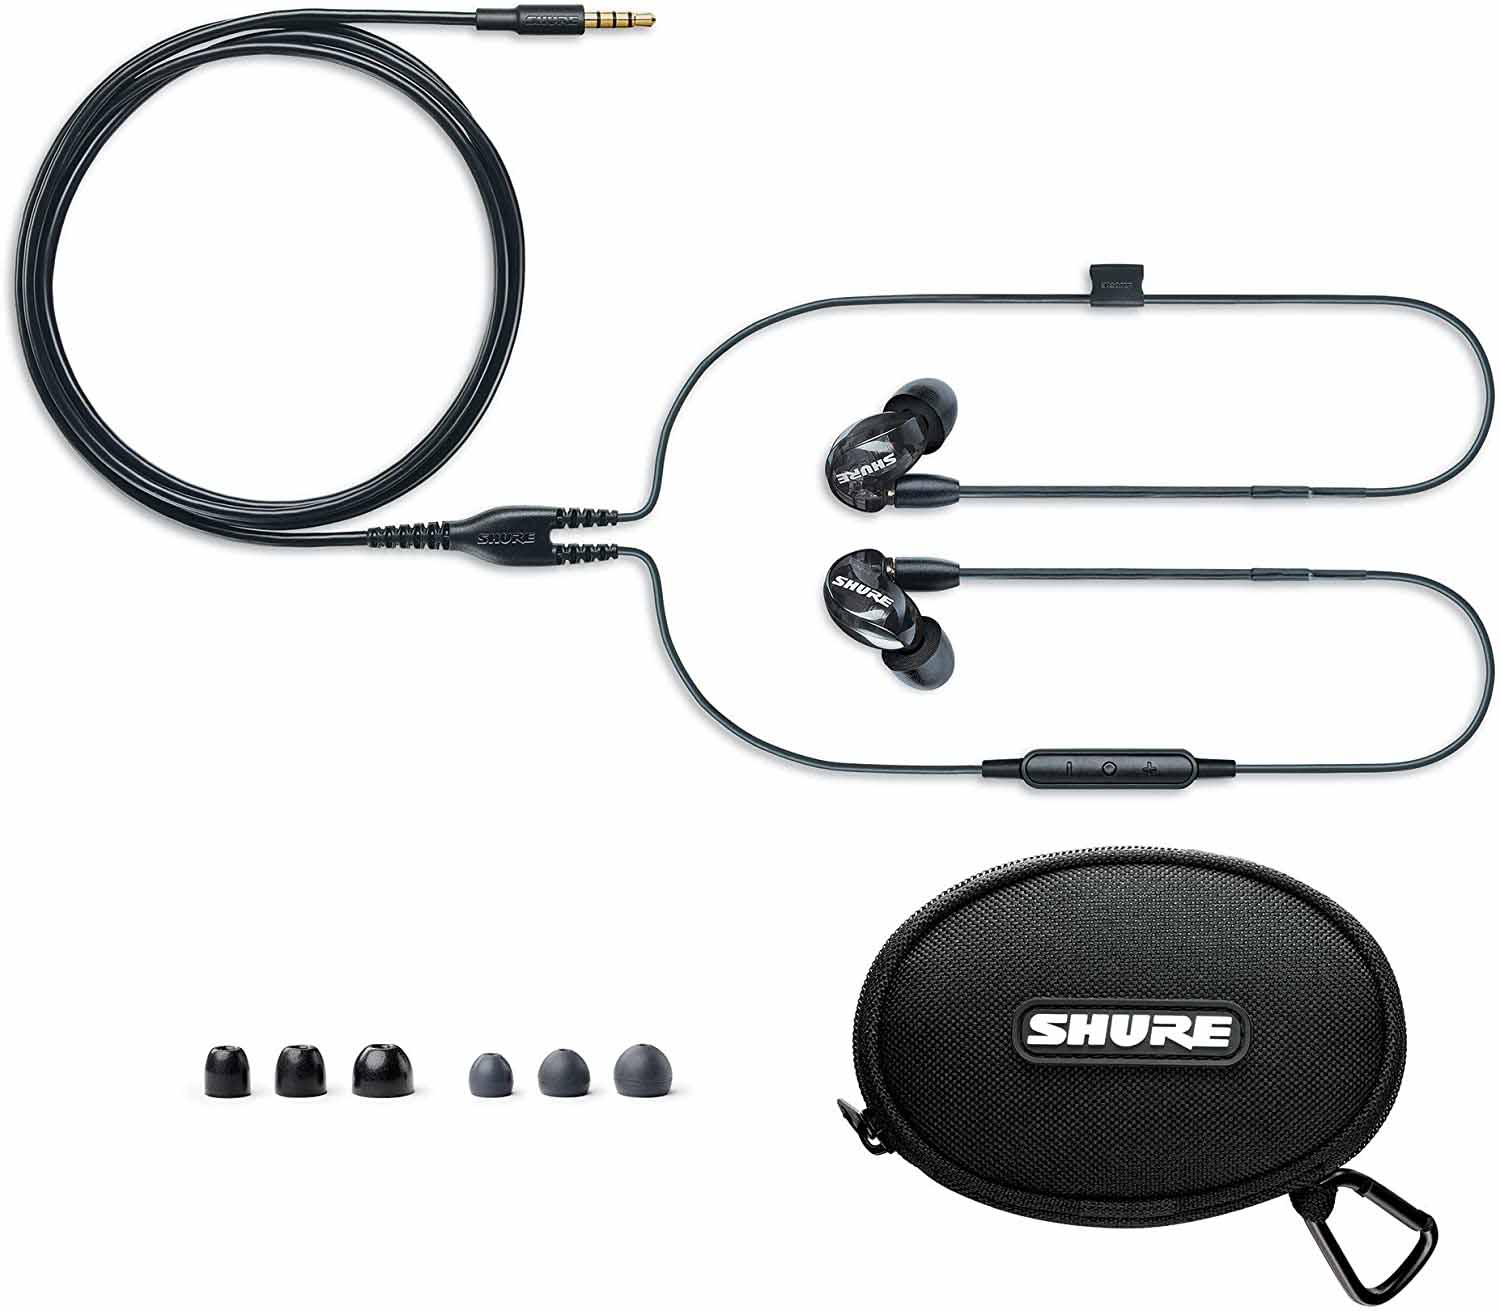 B-Stock: Shure SE215-K+UNI Sound Isolating Earphones with Mic - Black - Hollywood DJ